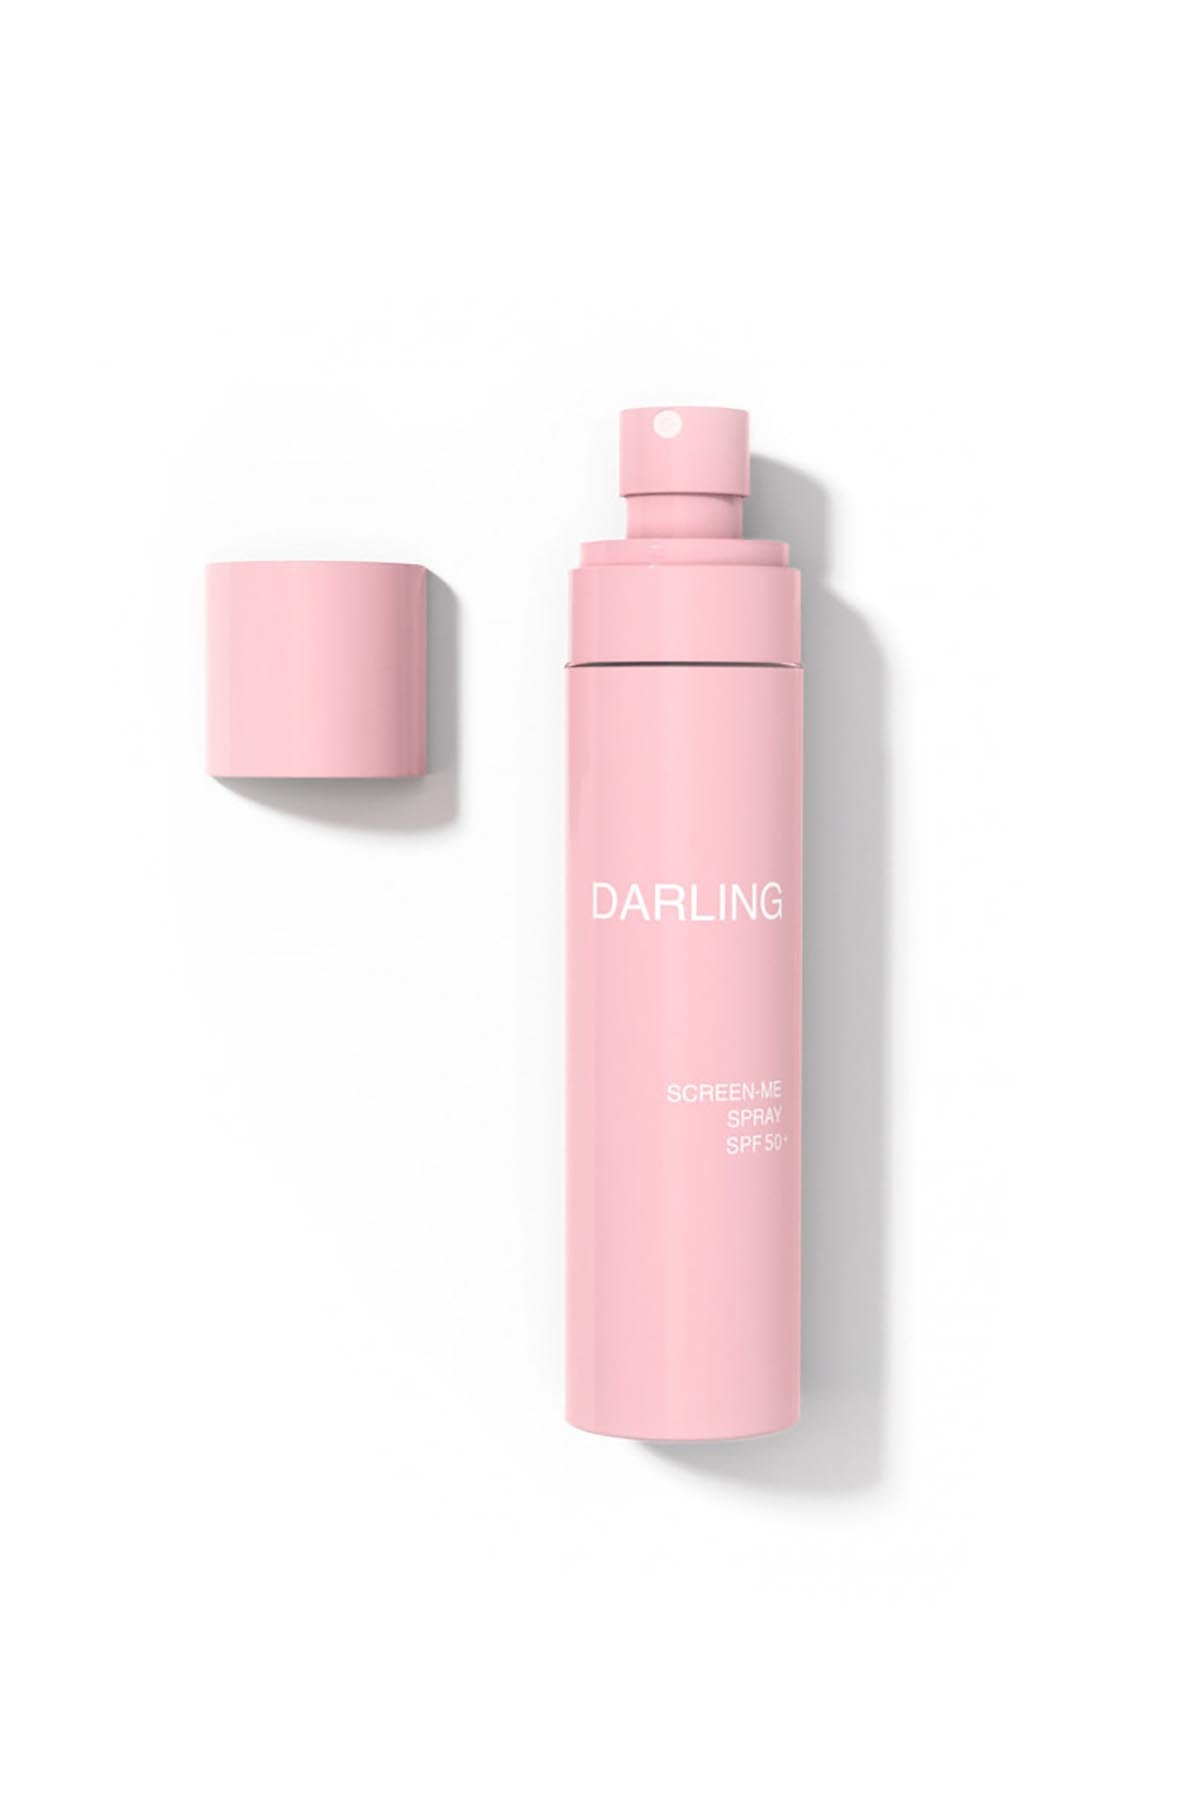 Darling screen-me spray spf 50+ - 150 ml-1